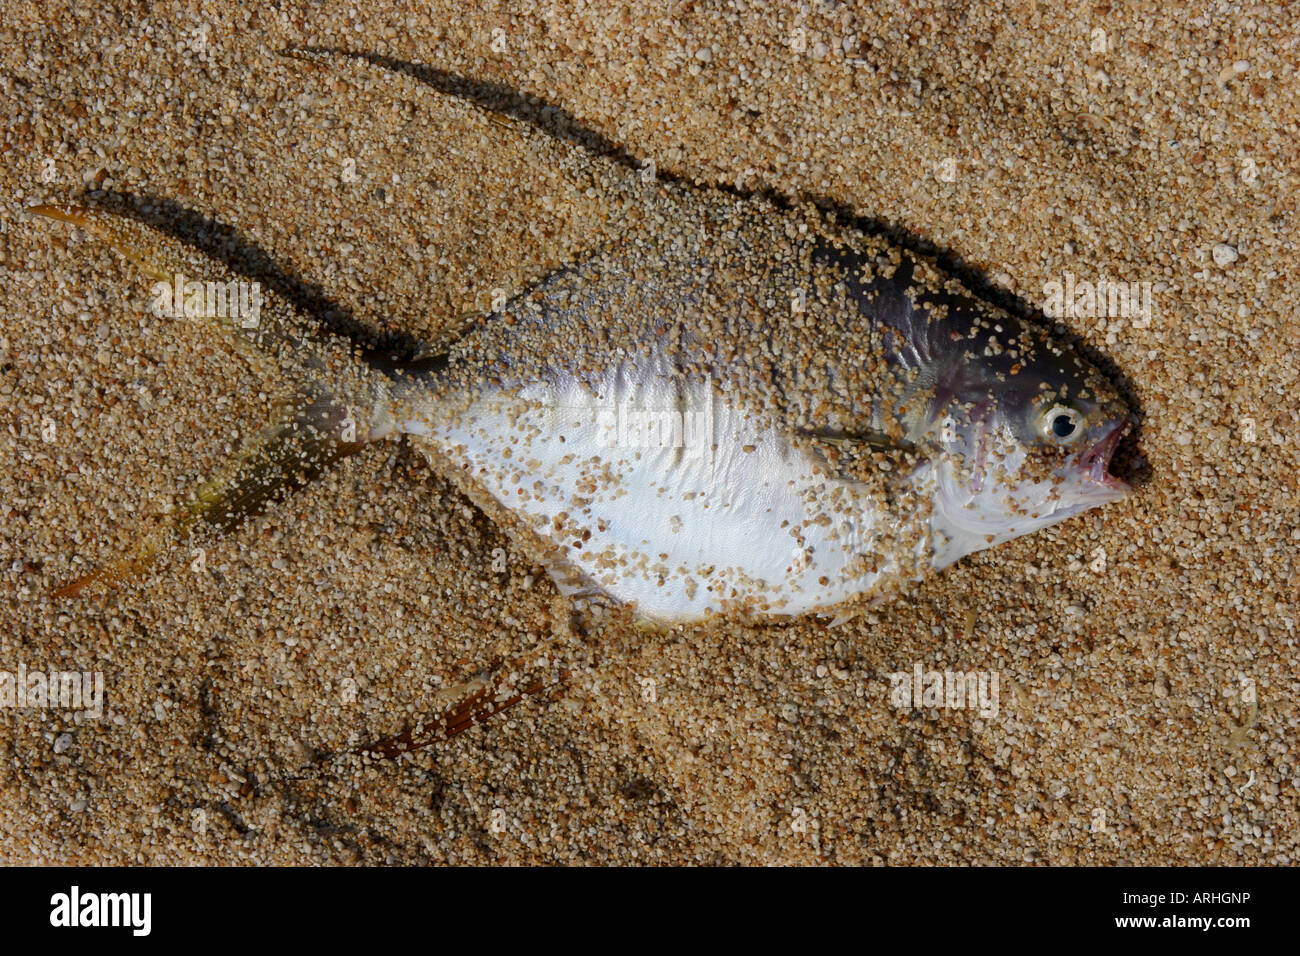 fish stranded on beach Stock Photo